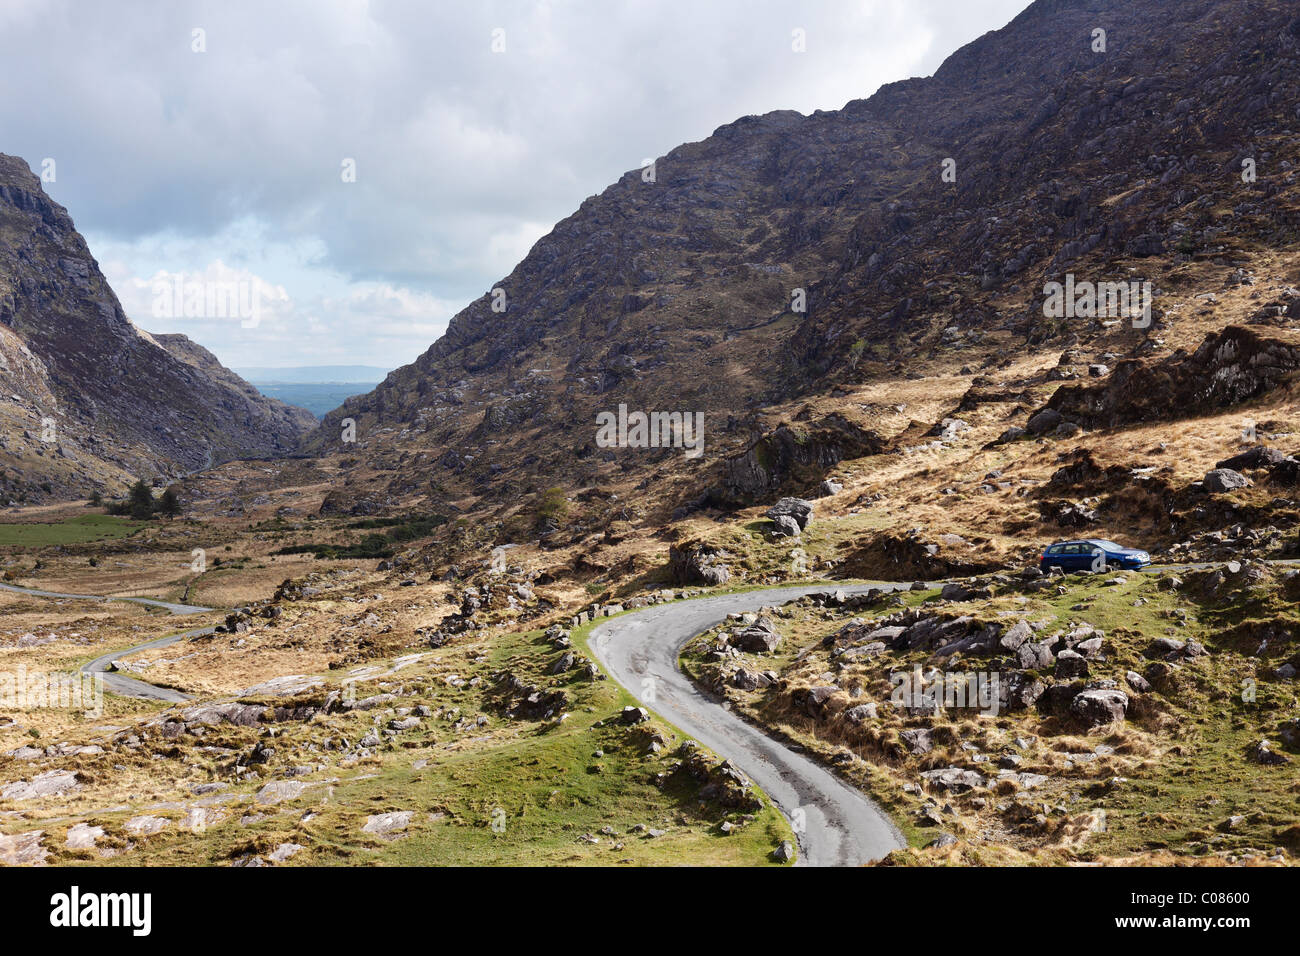 Mountain pass road, Gap of Dunloe near Killarney, County Kerry, Ireland, British Isles, Europe Stock Photo